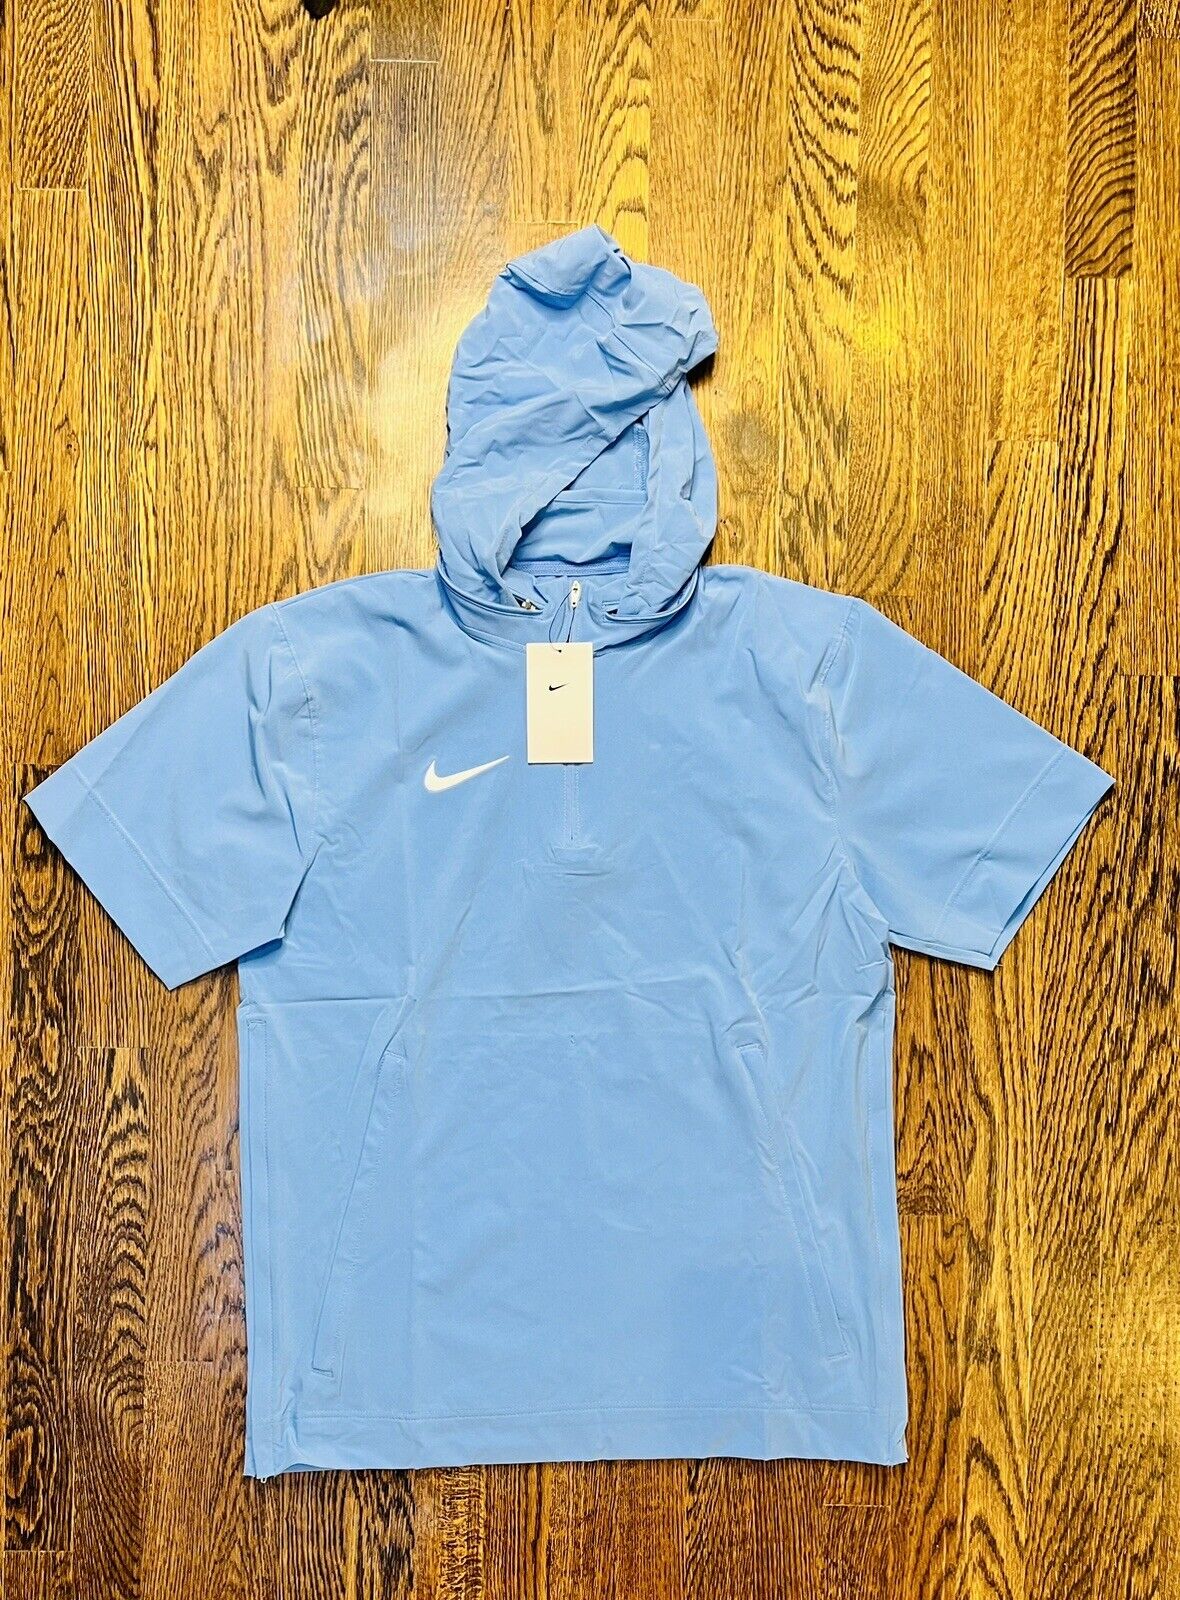 $95 Nike Men\'s Short-Sleeve Woven Hooded Coach Jacket Blue Small DV6755-011 Unc